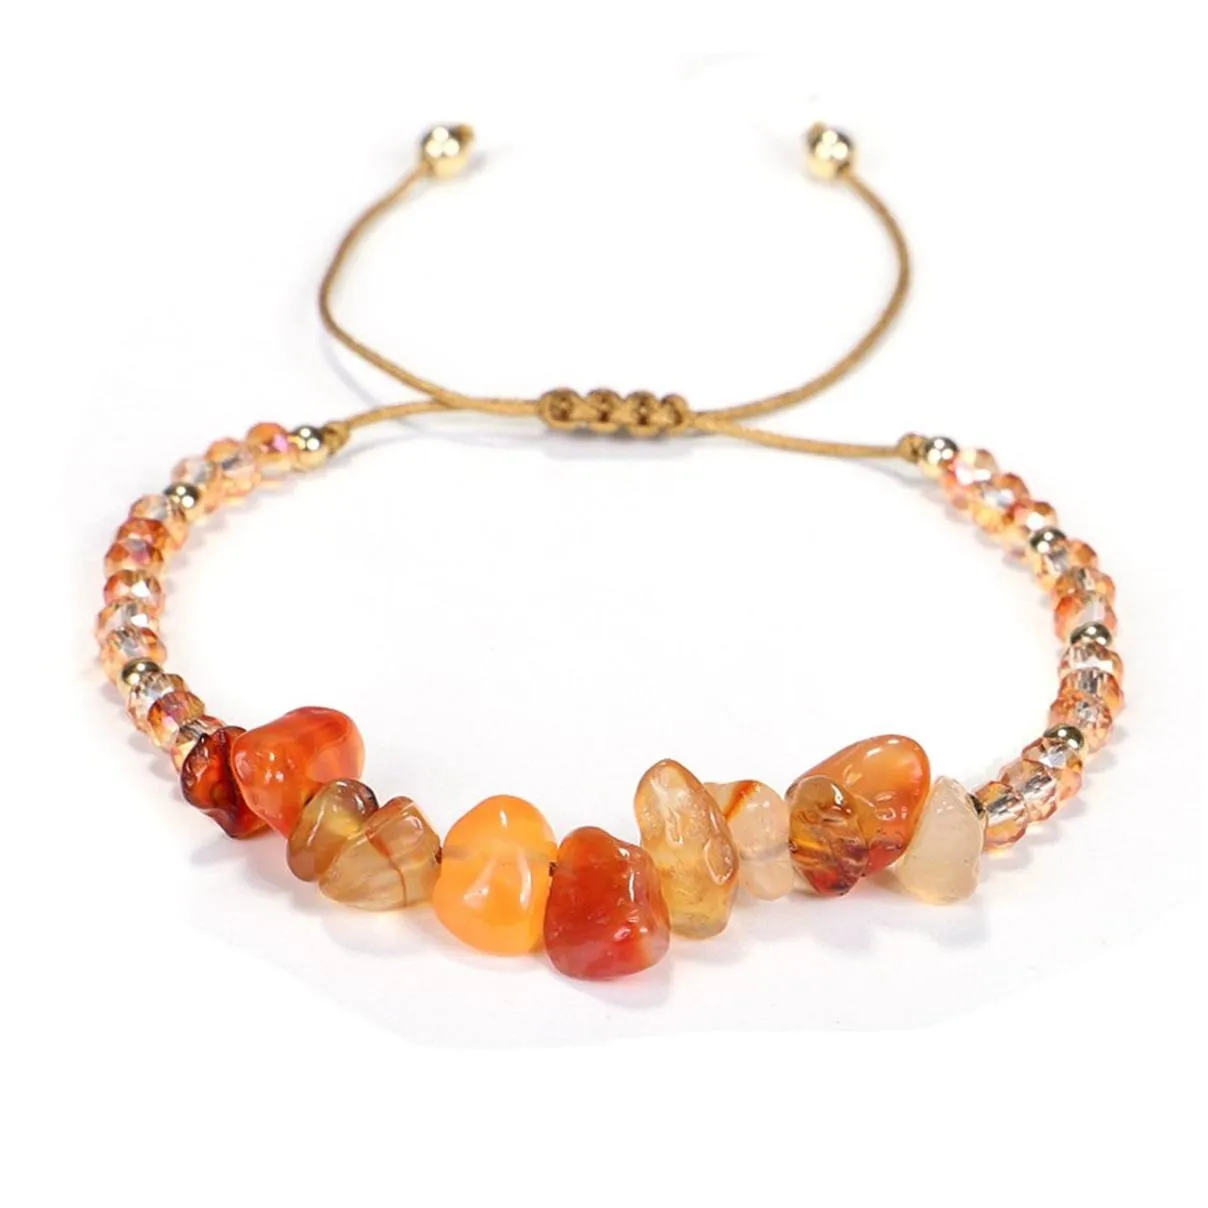 Fashion Jewelry Amethyst Rose Quartz Hand-woven Bracelet Color Irregular Broken Stone Bead Mixed Bracelet Adjustable